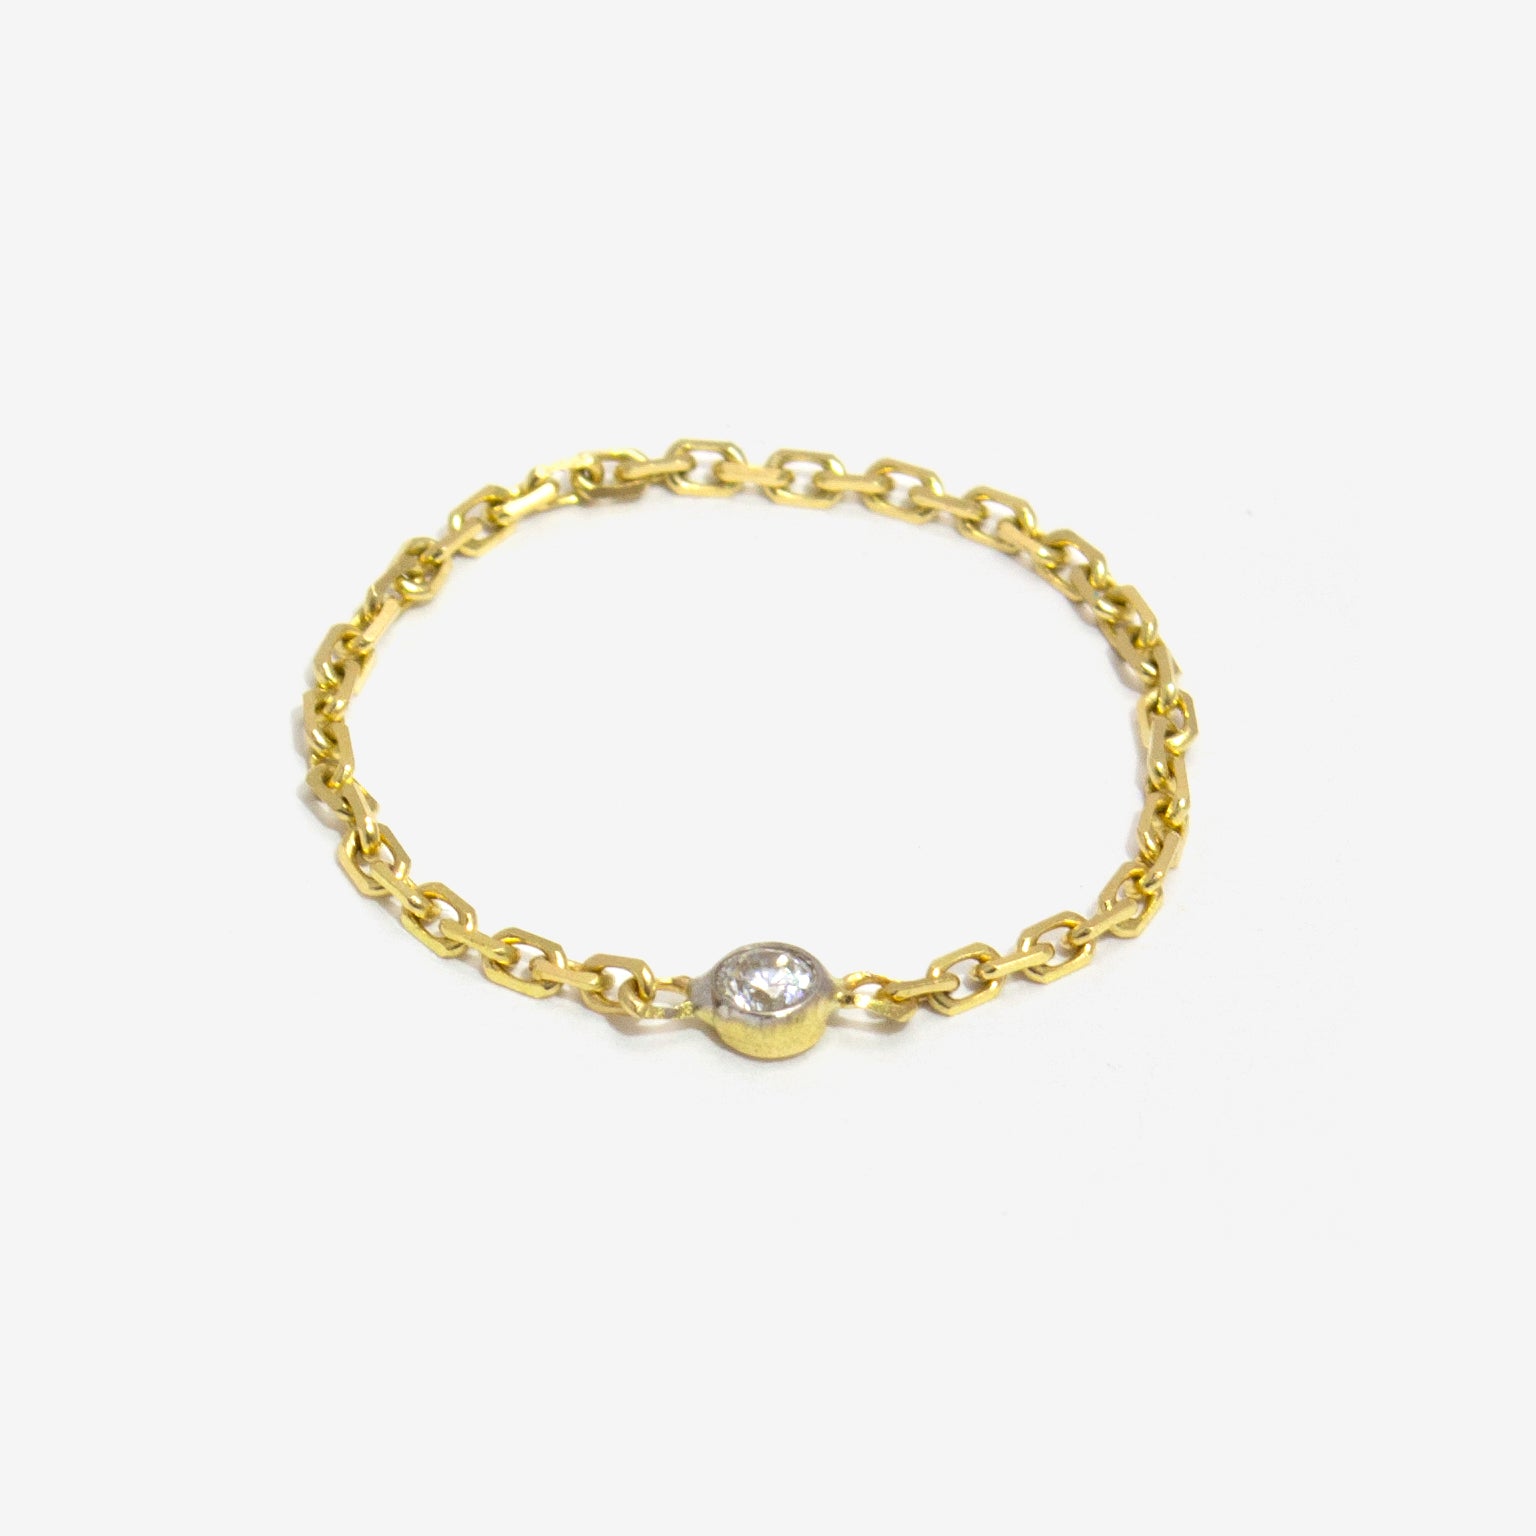 Spota I Gold Ring - by Claurete Jewelry at Claurete.com